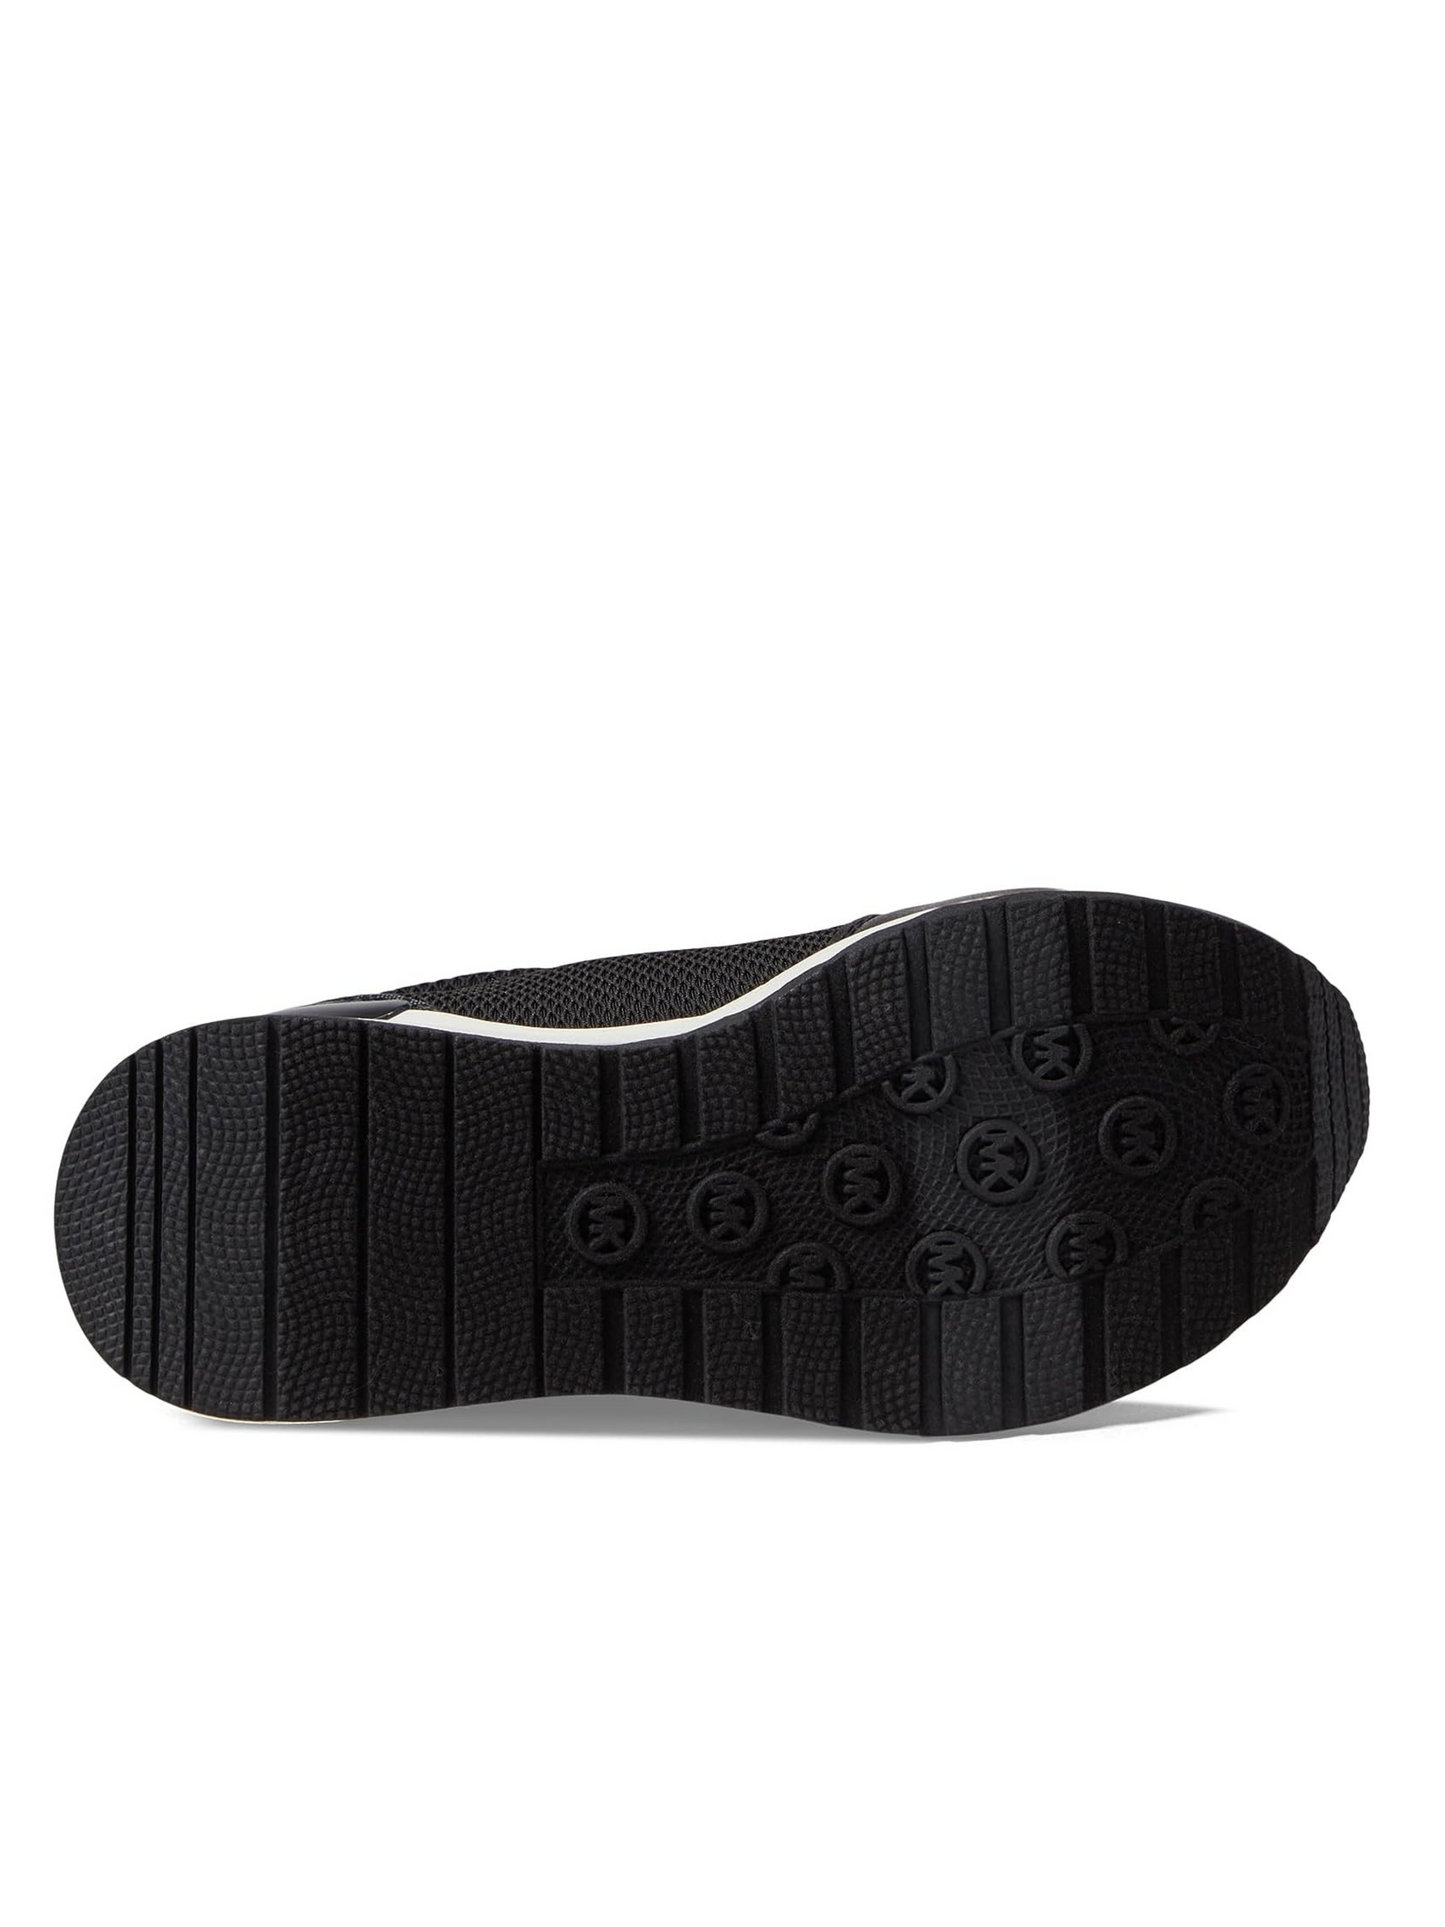 Michael Kors Neo Willis Wedges Shoes Black _MK100776C-001